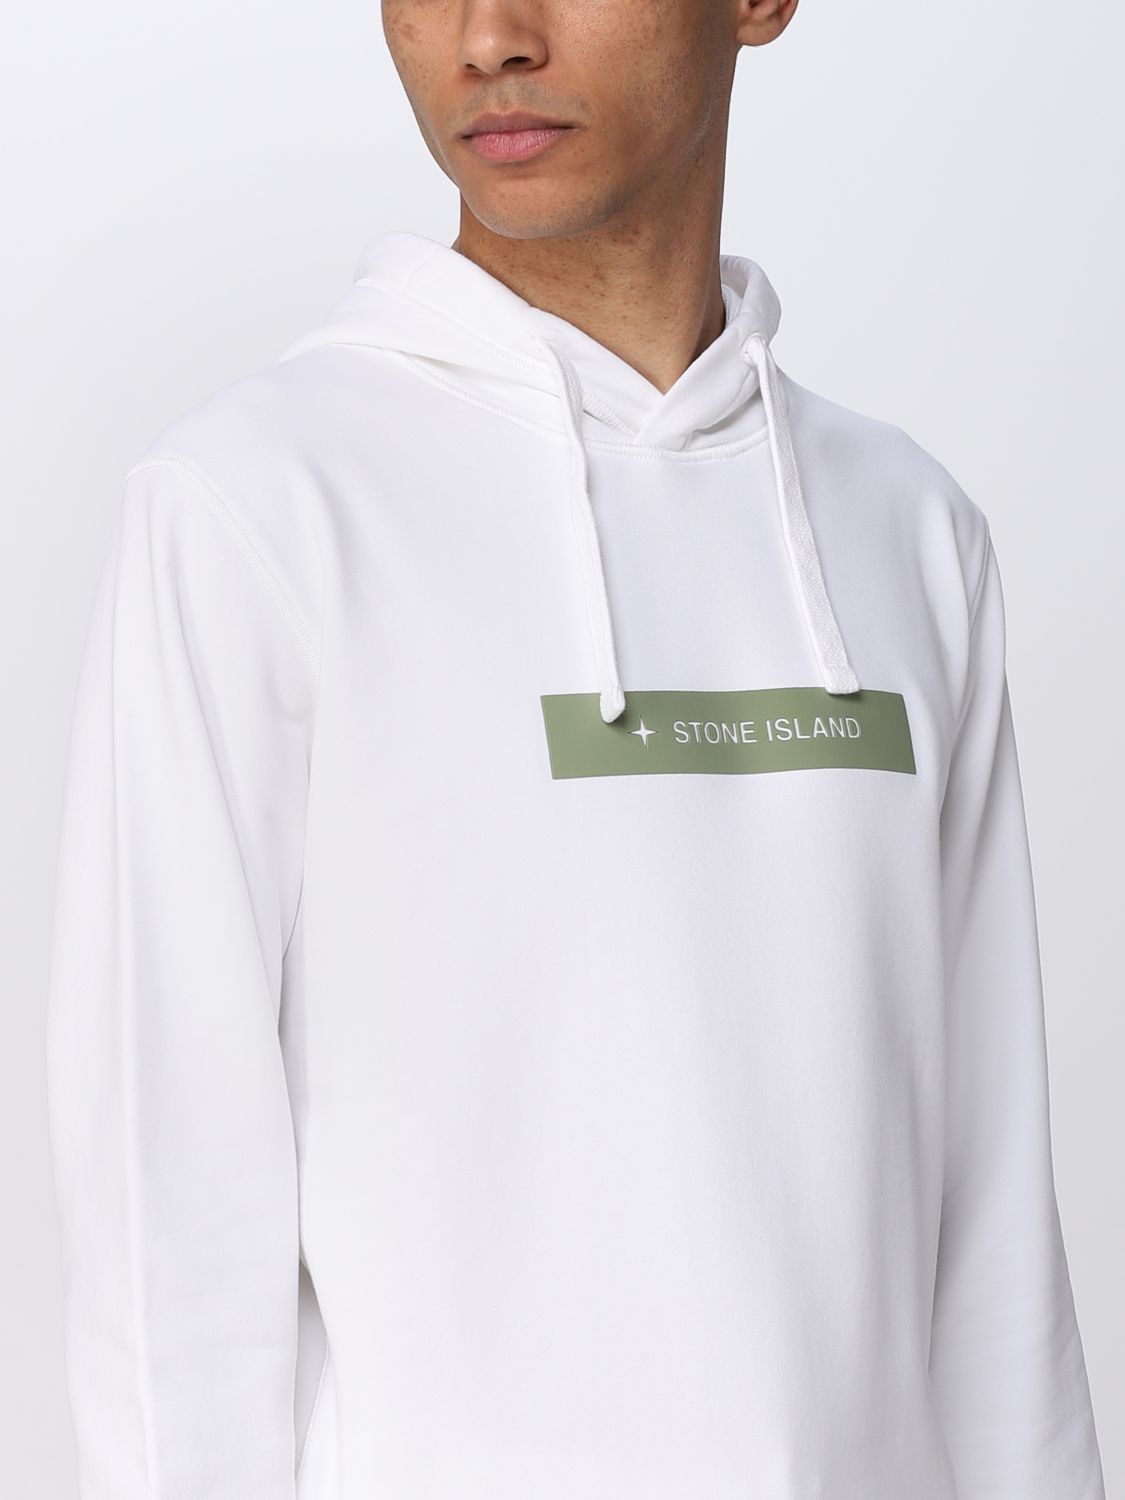 Foto gemak Passief STONE ISLAND: sweatshirt for man - White | Stone Island sweatshirt  781565585 online on GIGLIO.COM